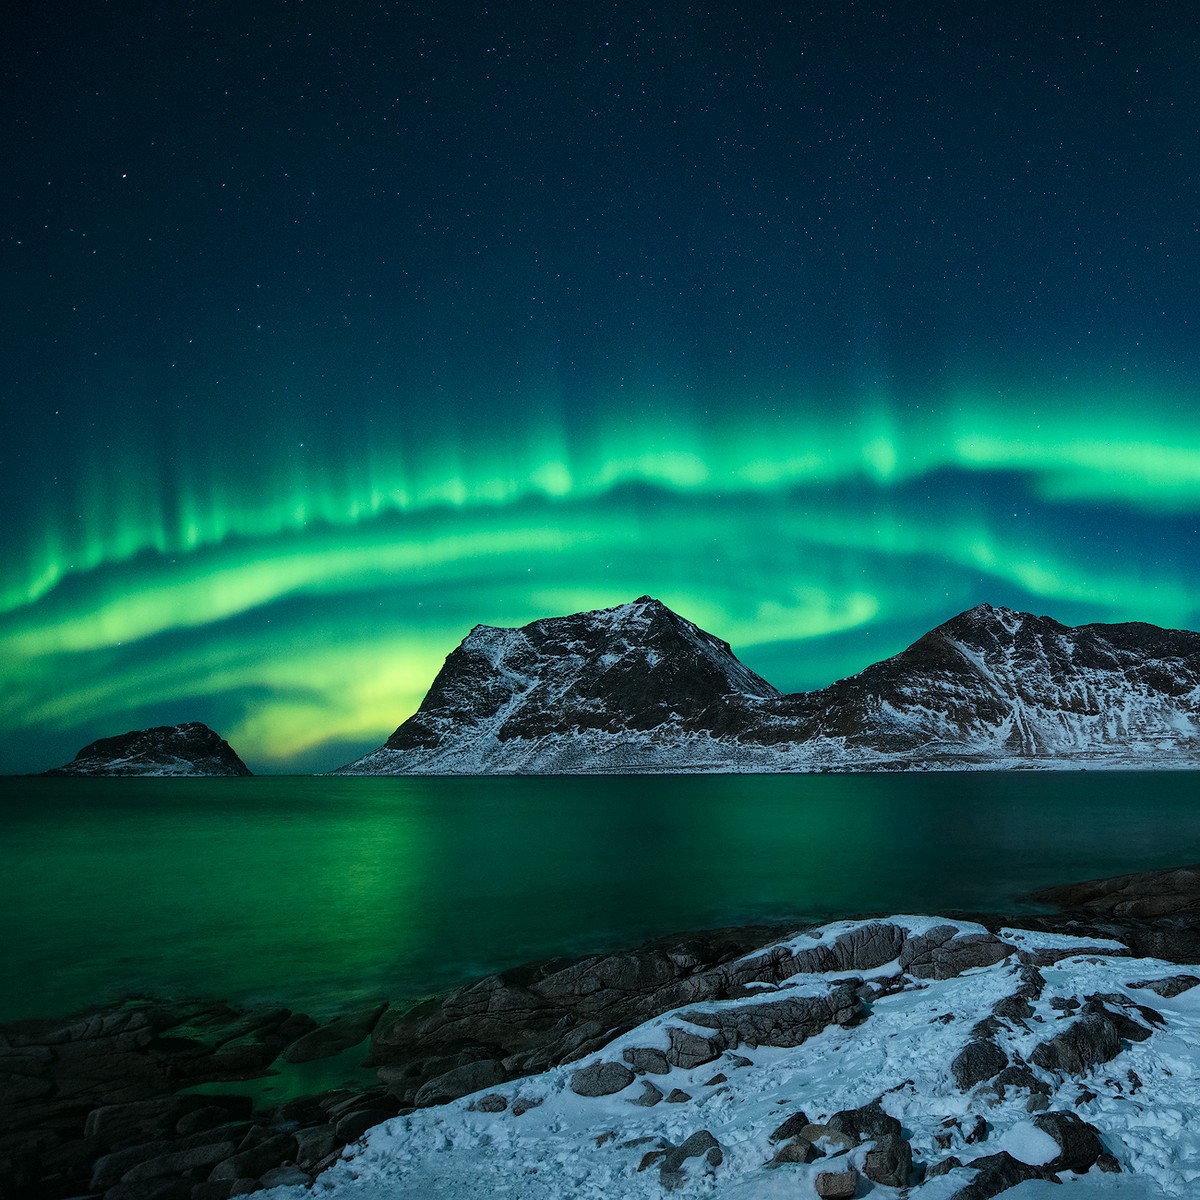 Quiz Answers Beginning With I Aurora borealis (Northern Lights)